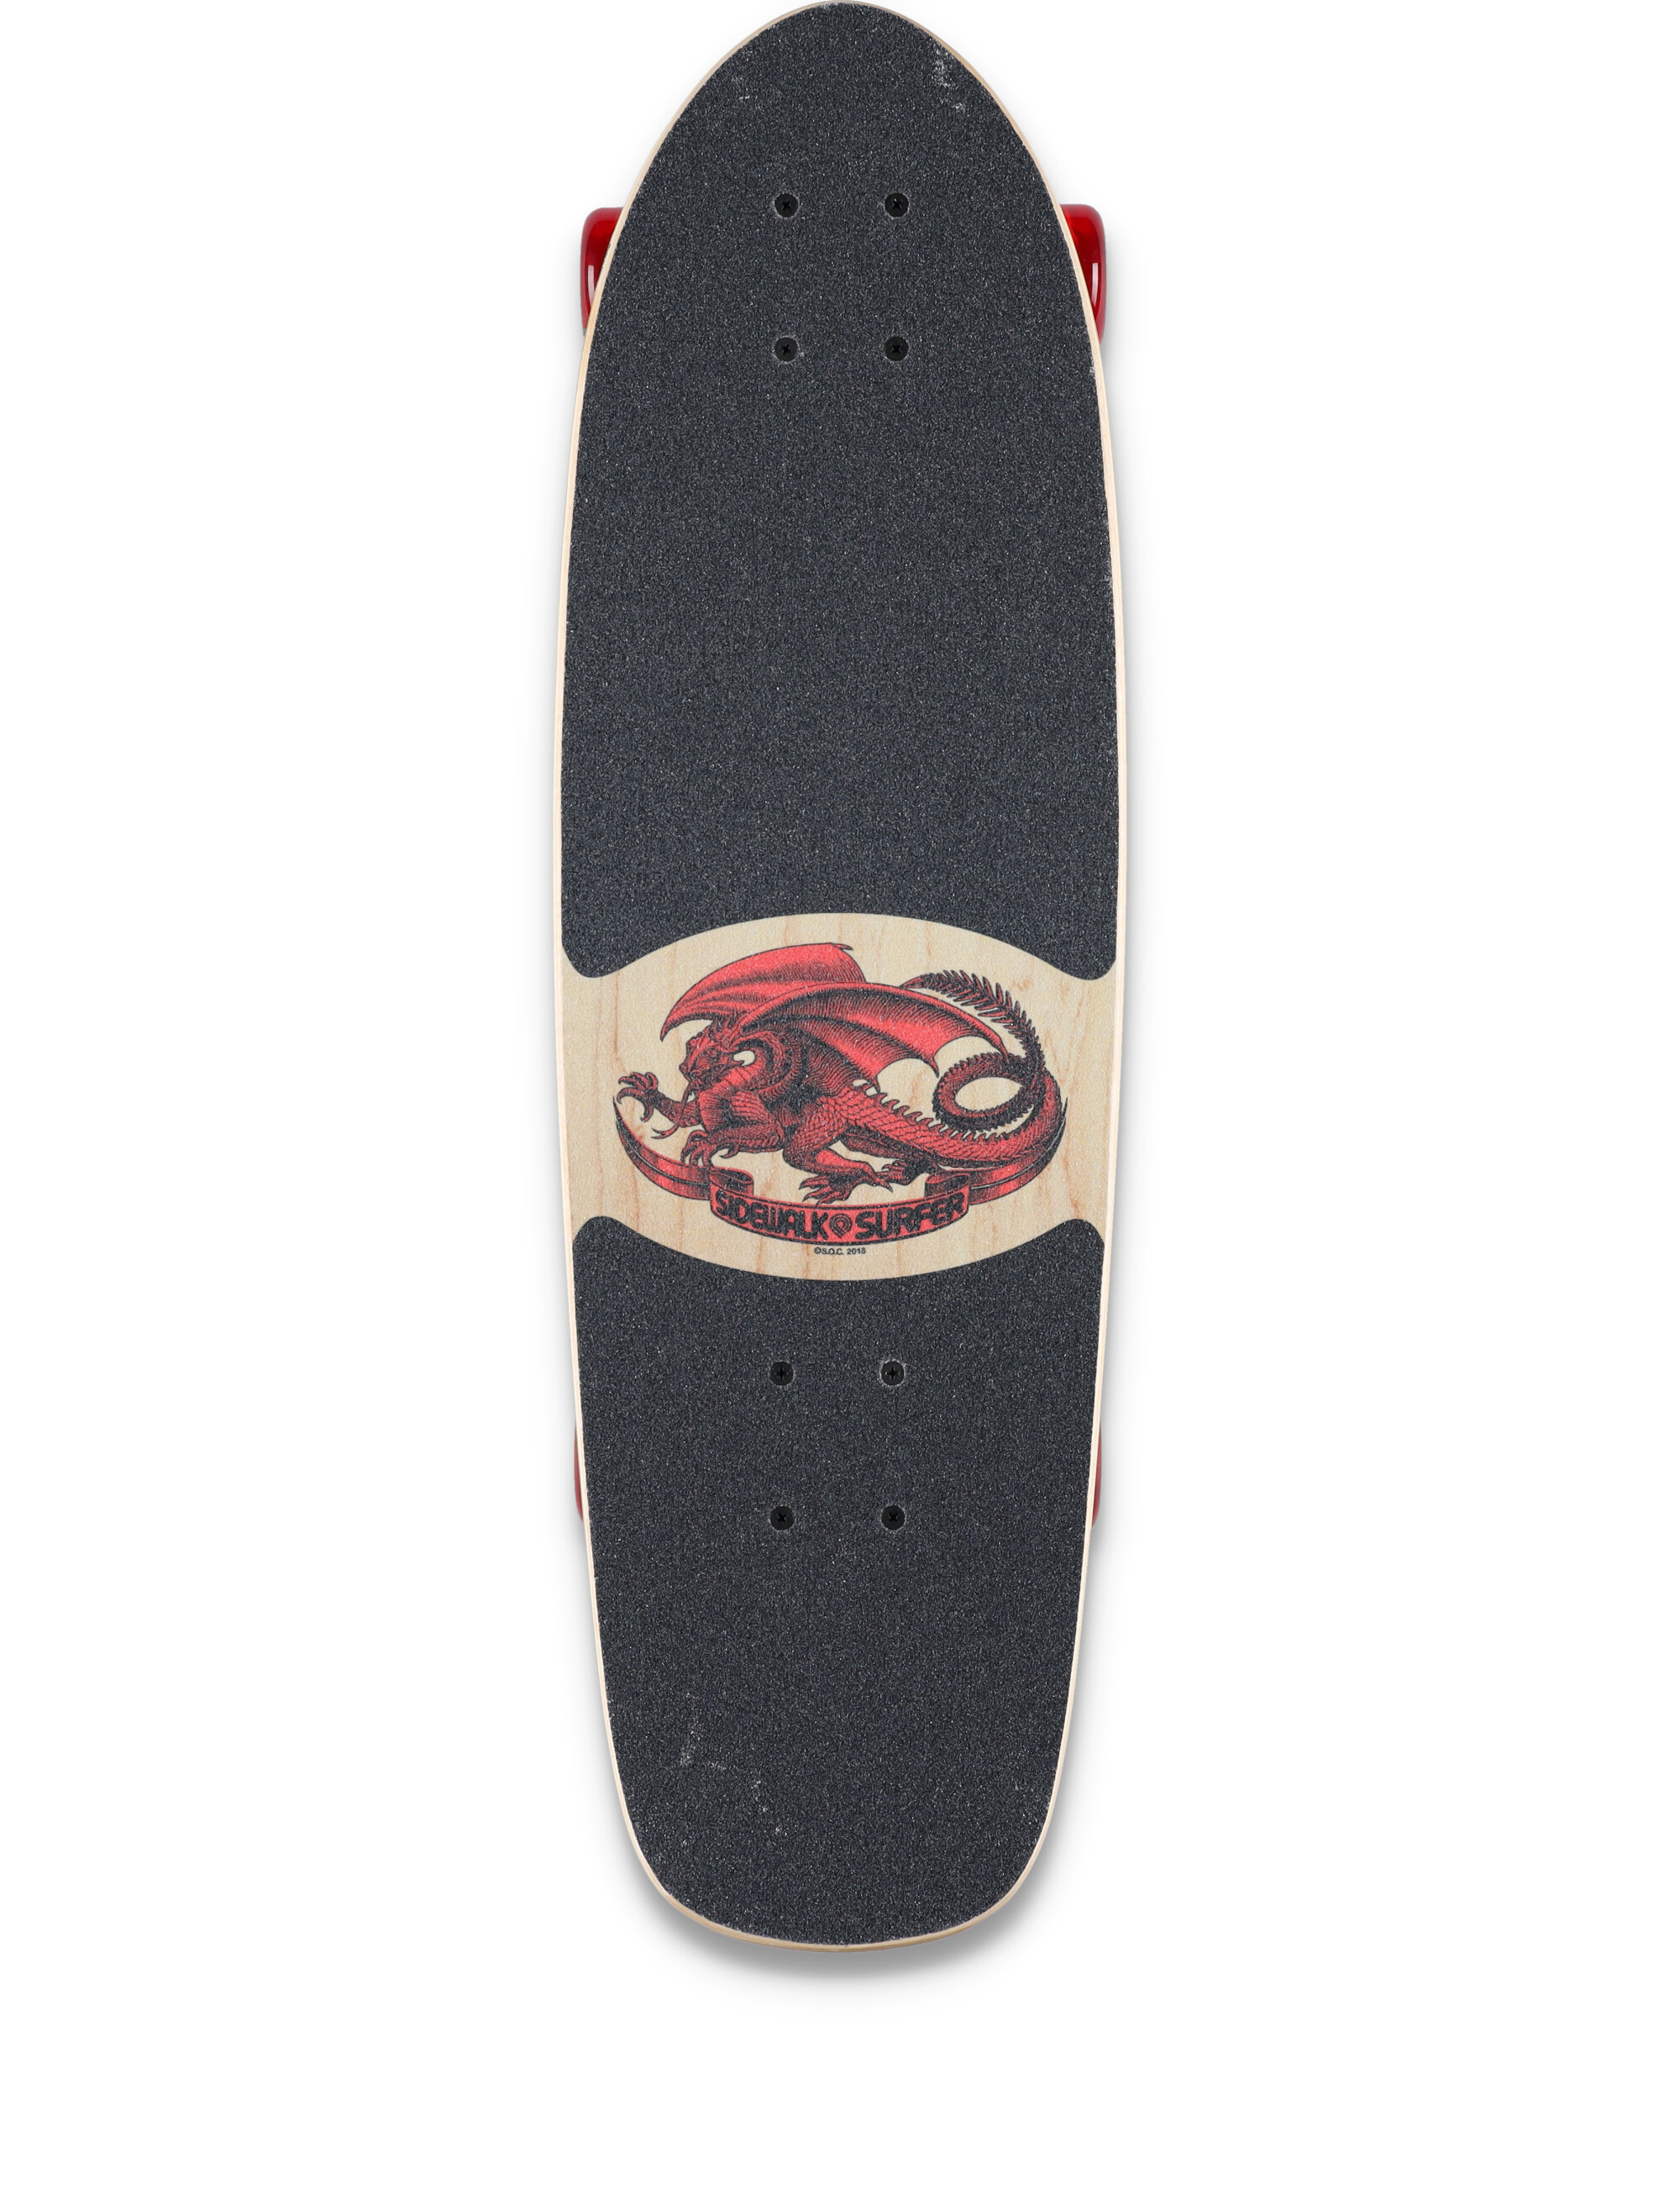 Powell Peralta Sidewalk Surfer Quad Stringer Birch Complete Skateboard,  color MULTICOLORED